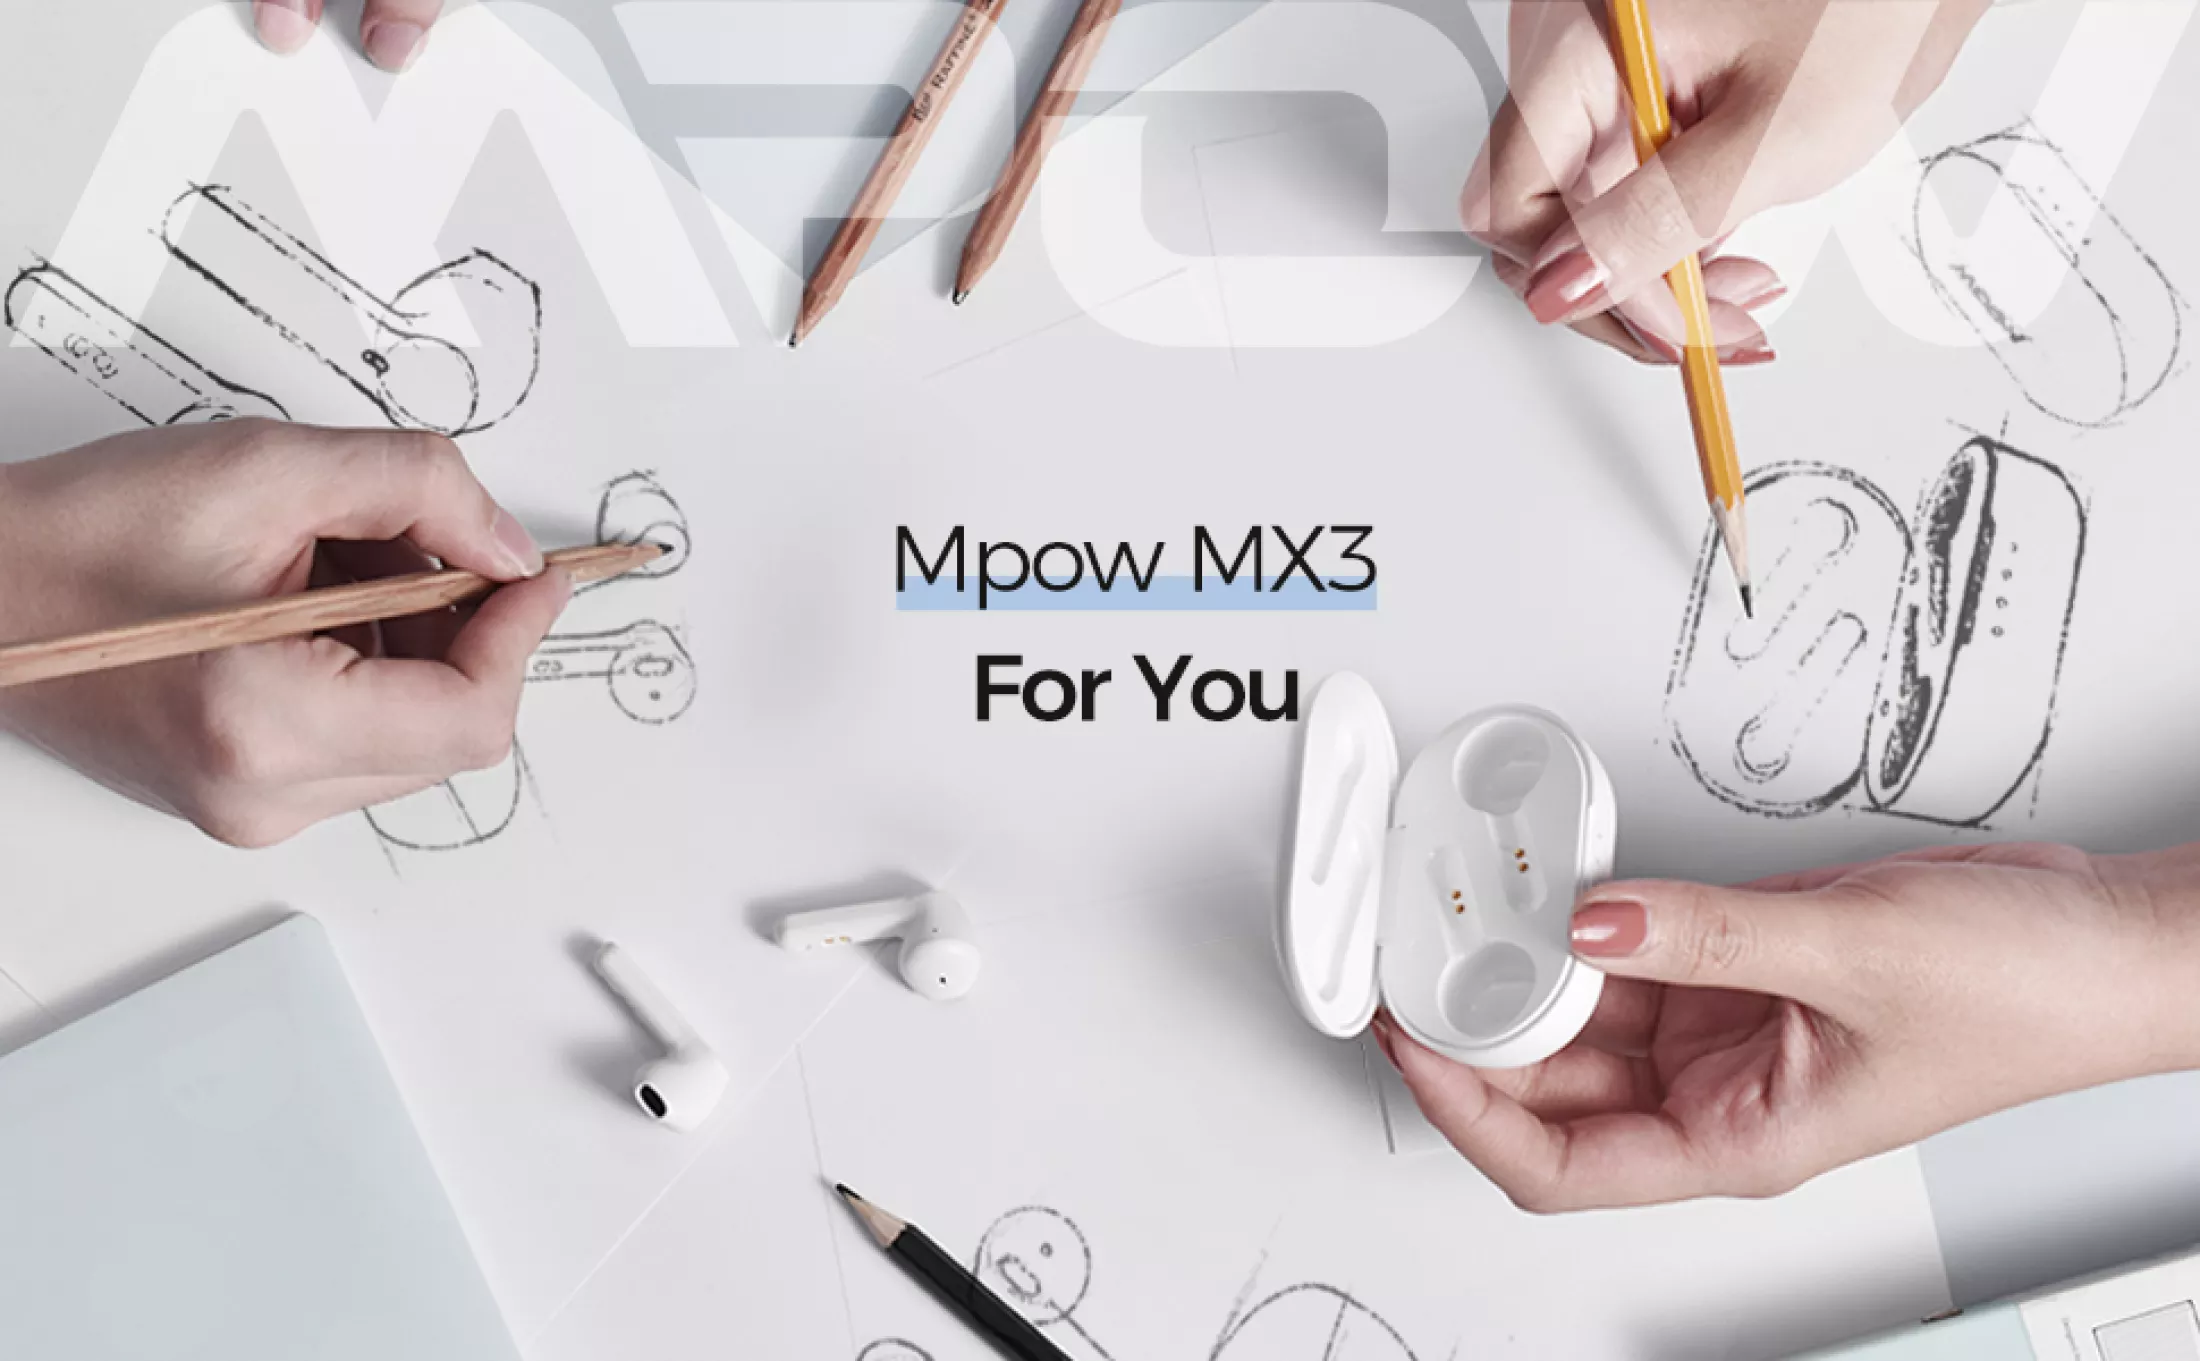 Buy Original Mpow MX3 Bluetooth Earbuds in Pakistan